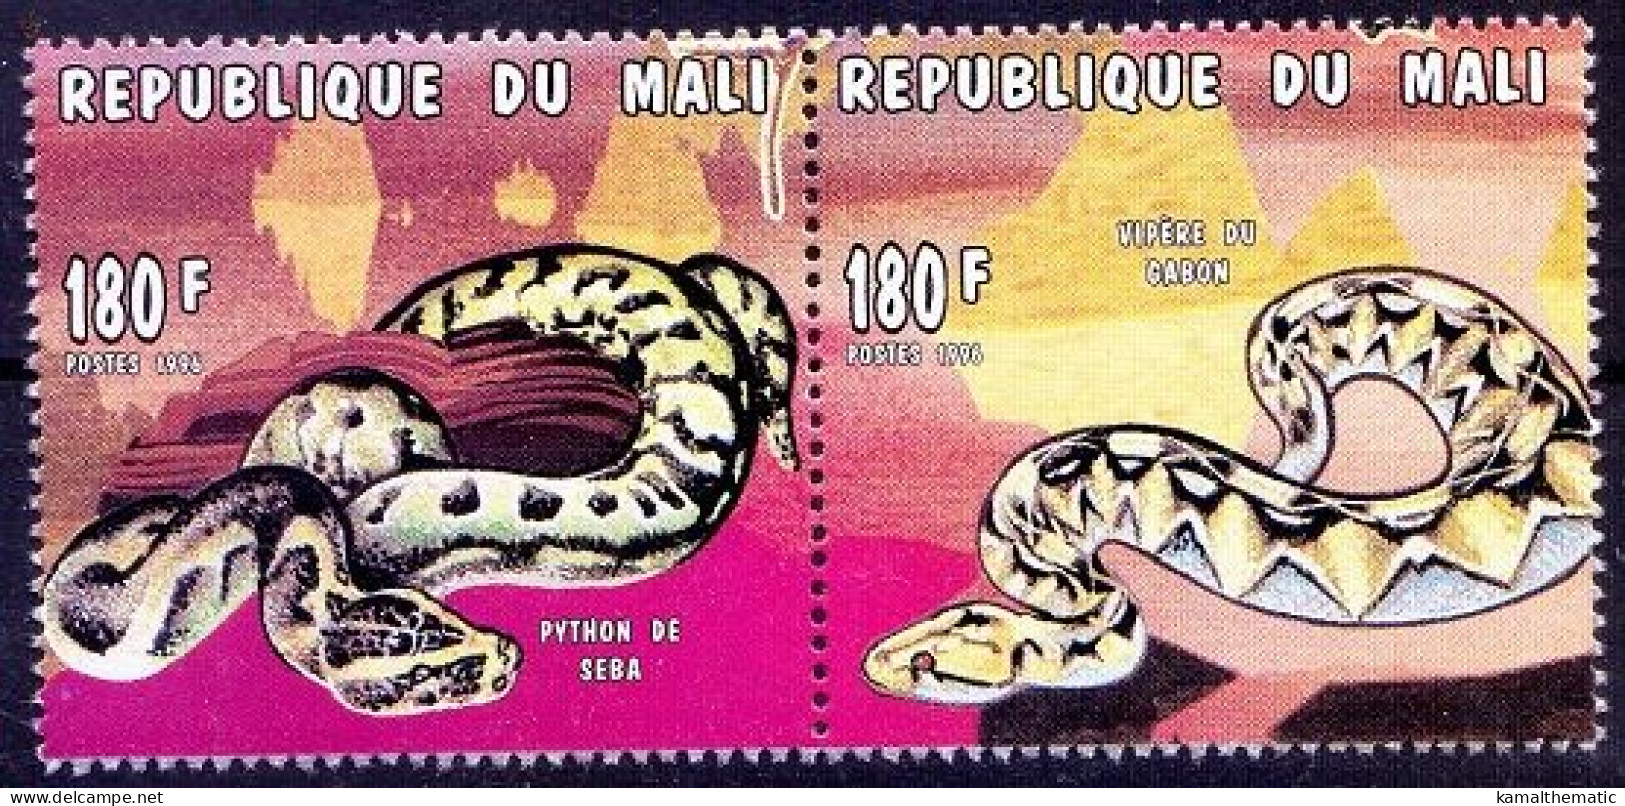 Gaboon Viper, African Rock Python, Snakes, Reptiles, Mali 1996 MNH - Serpents